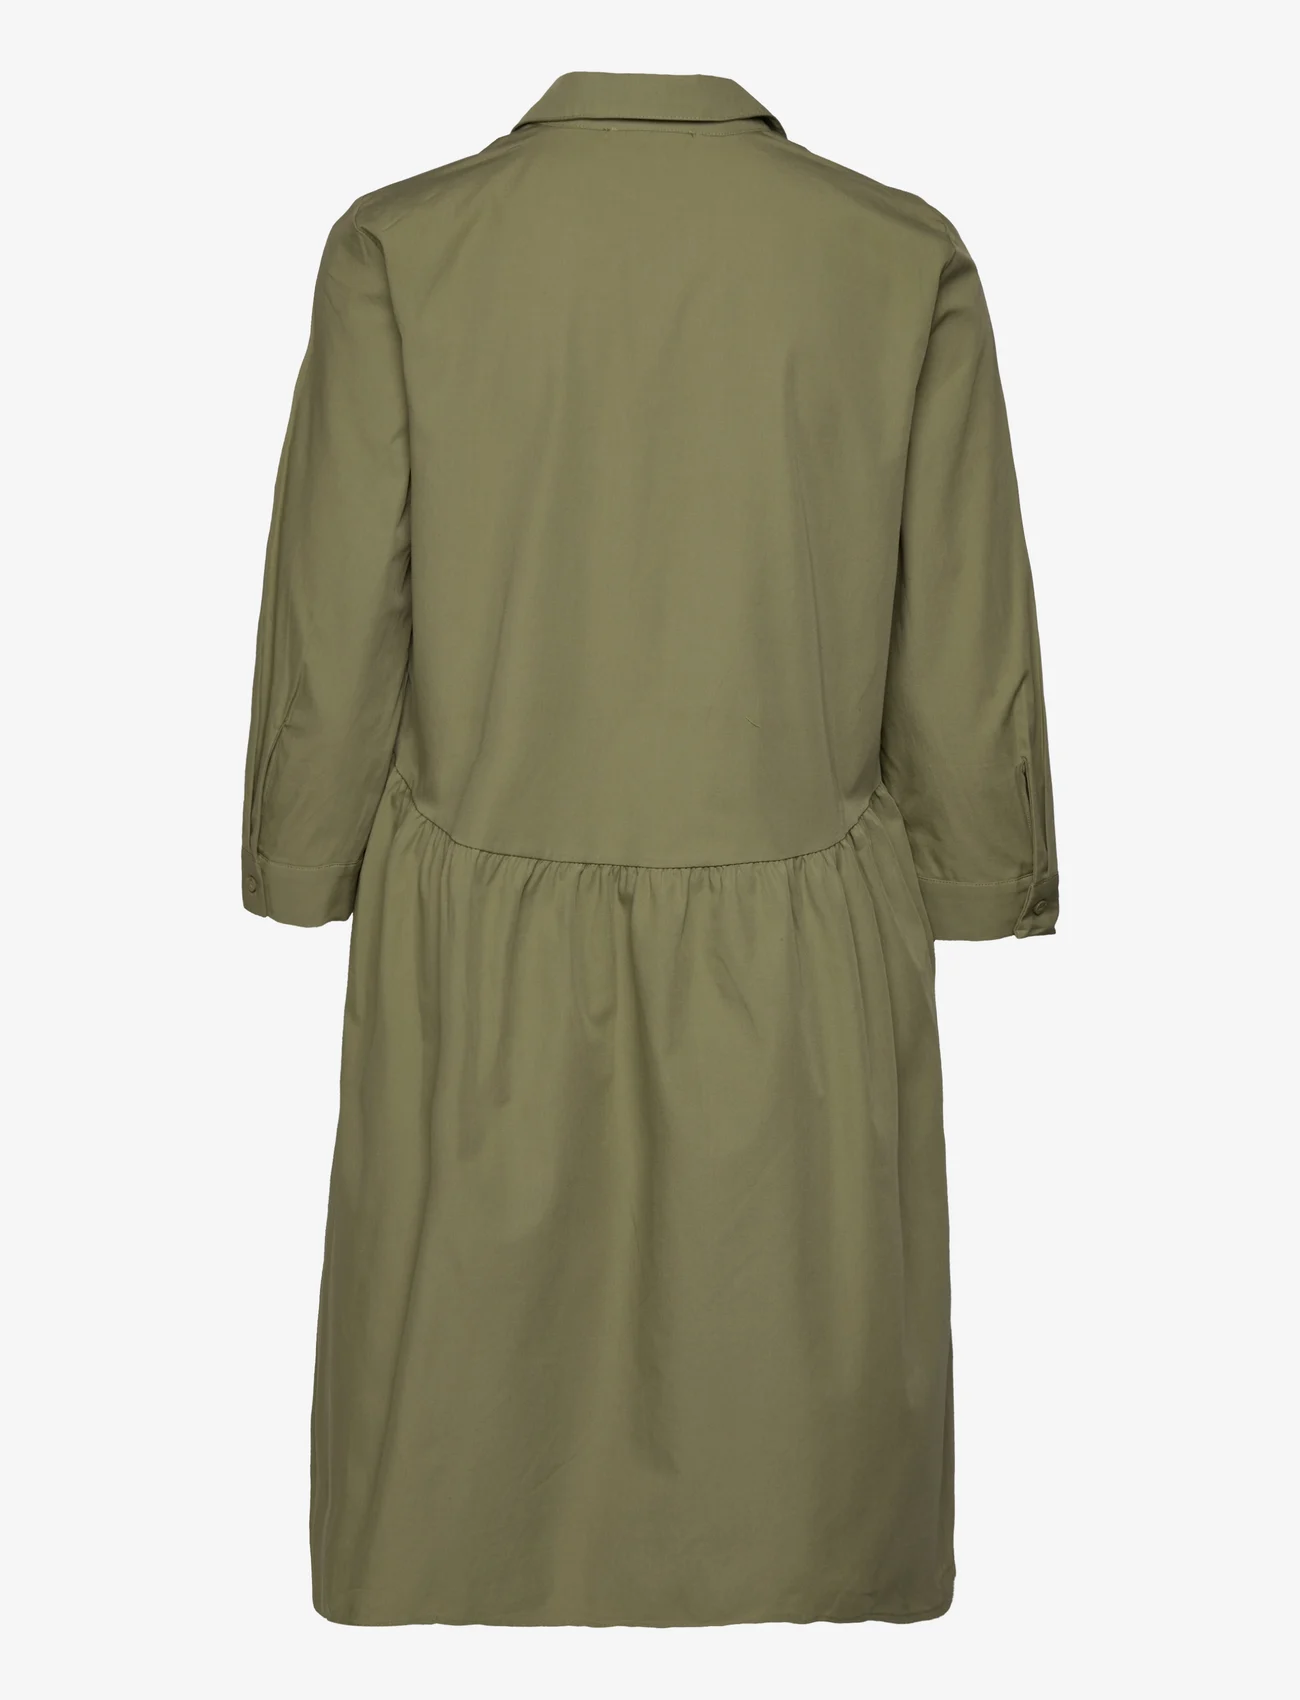 Esprit Casual - Dresses light woven - shirt dresses - light khaki - 1